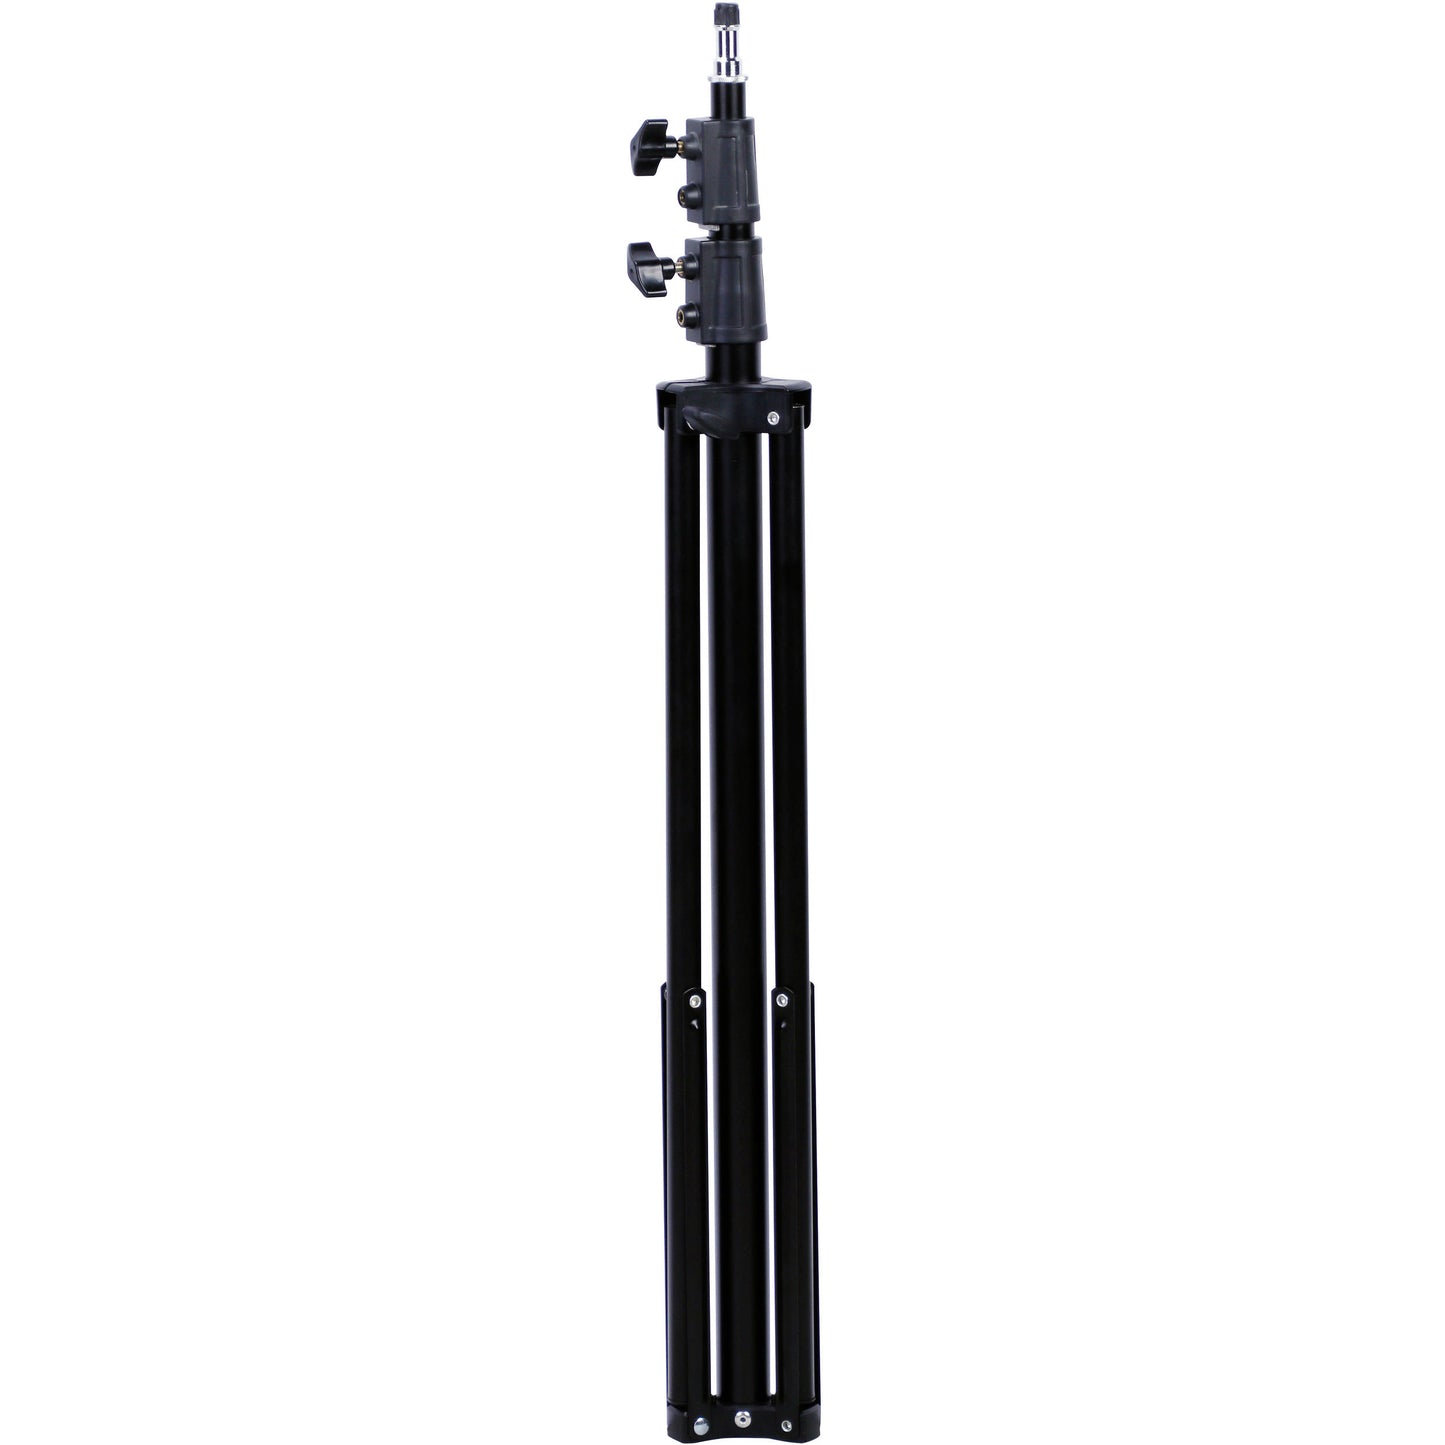 Phottix P220 3-Section Aluminum Light Stand with 220cm Max Height 1.5kg Load Capacity PH88213 for Studio Light Reflector LED Speedlight